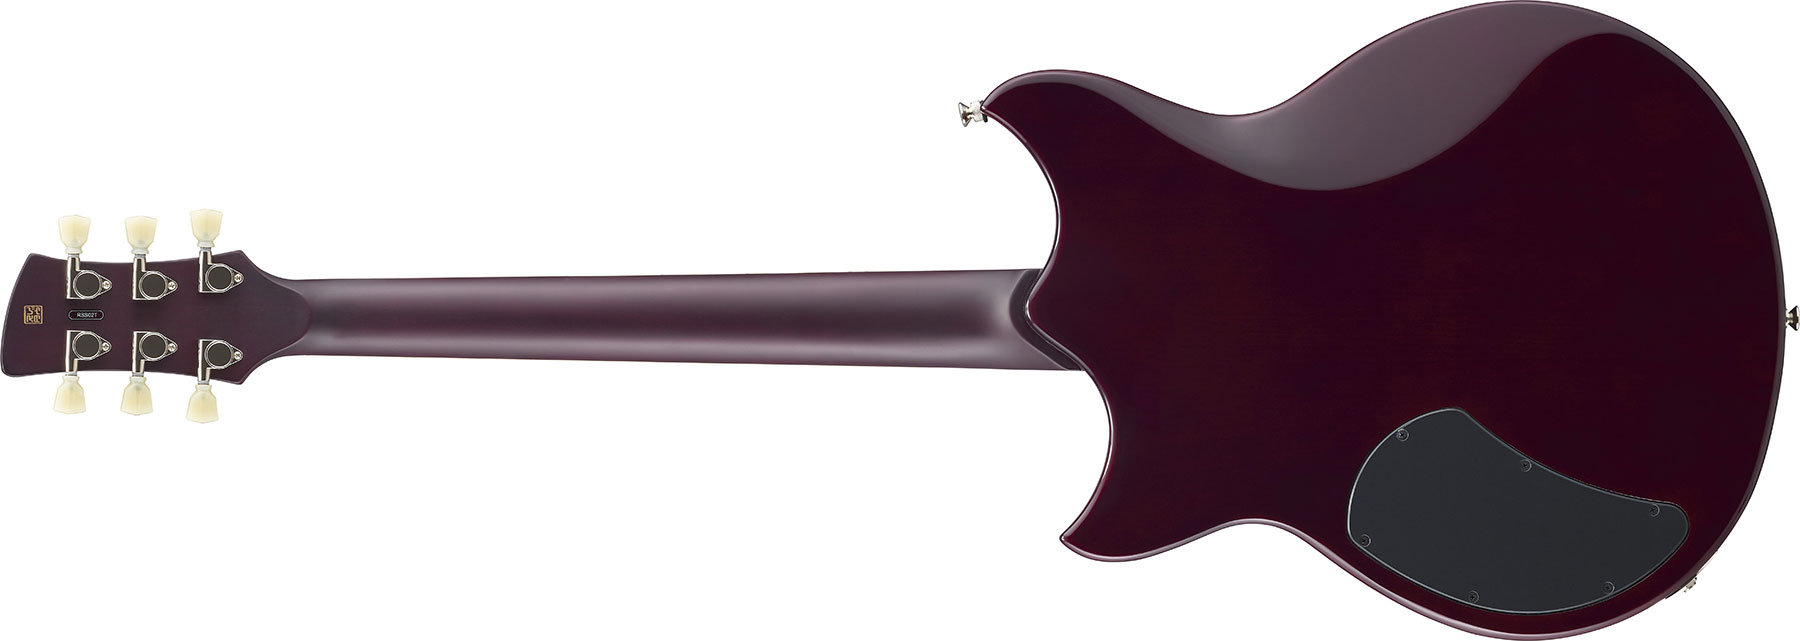 Yamaha Rss02t Revstar Standard 2p90 Ht Rw - Hot Merlot - Double cut electric guitar - Variation 2